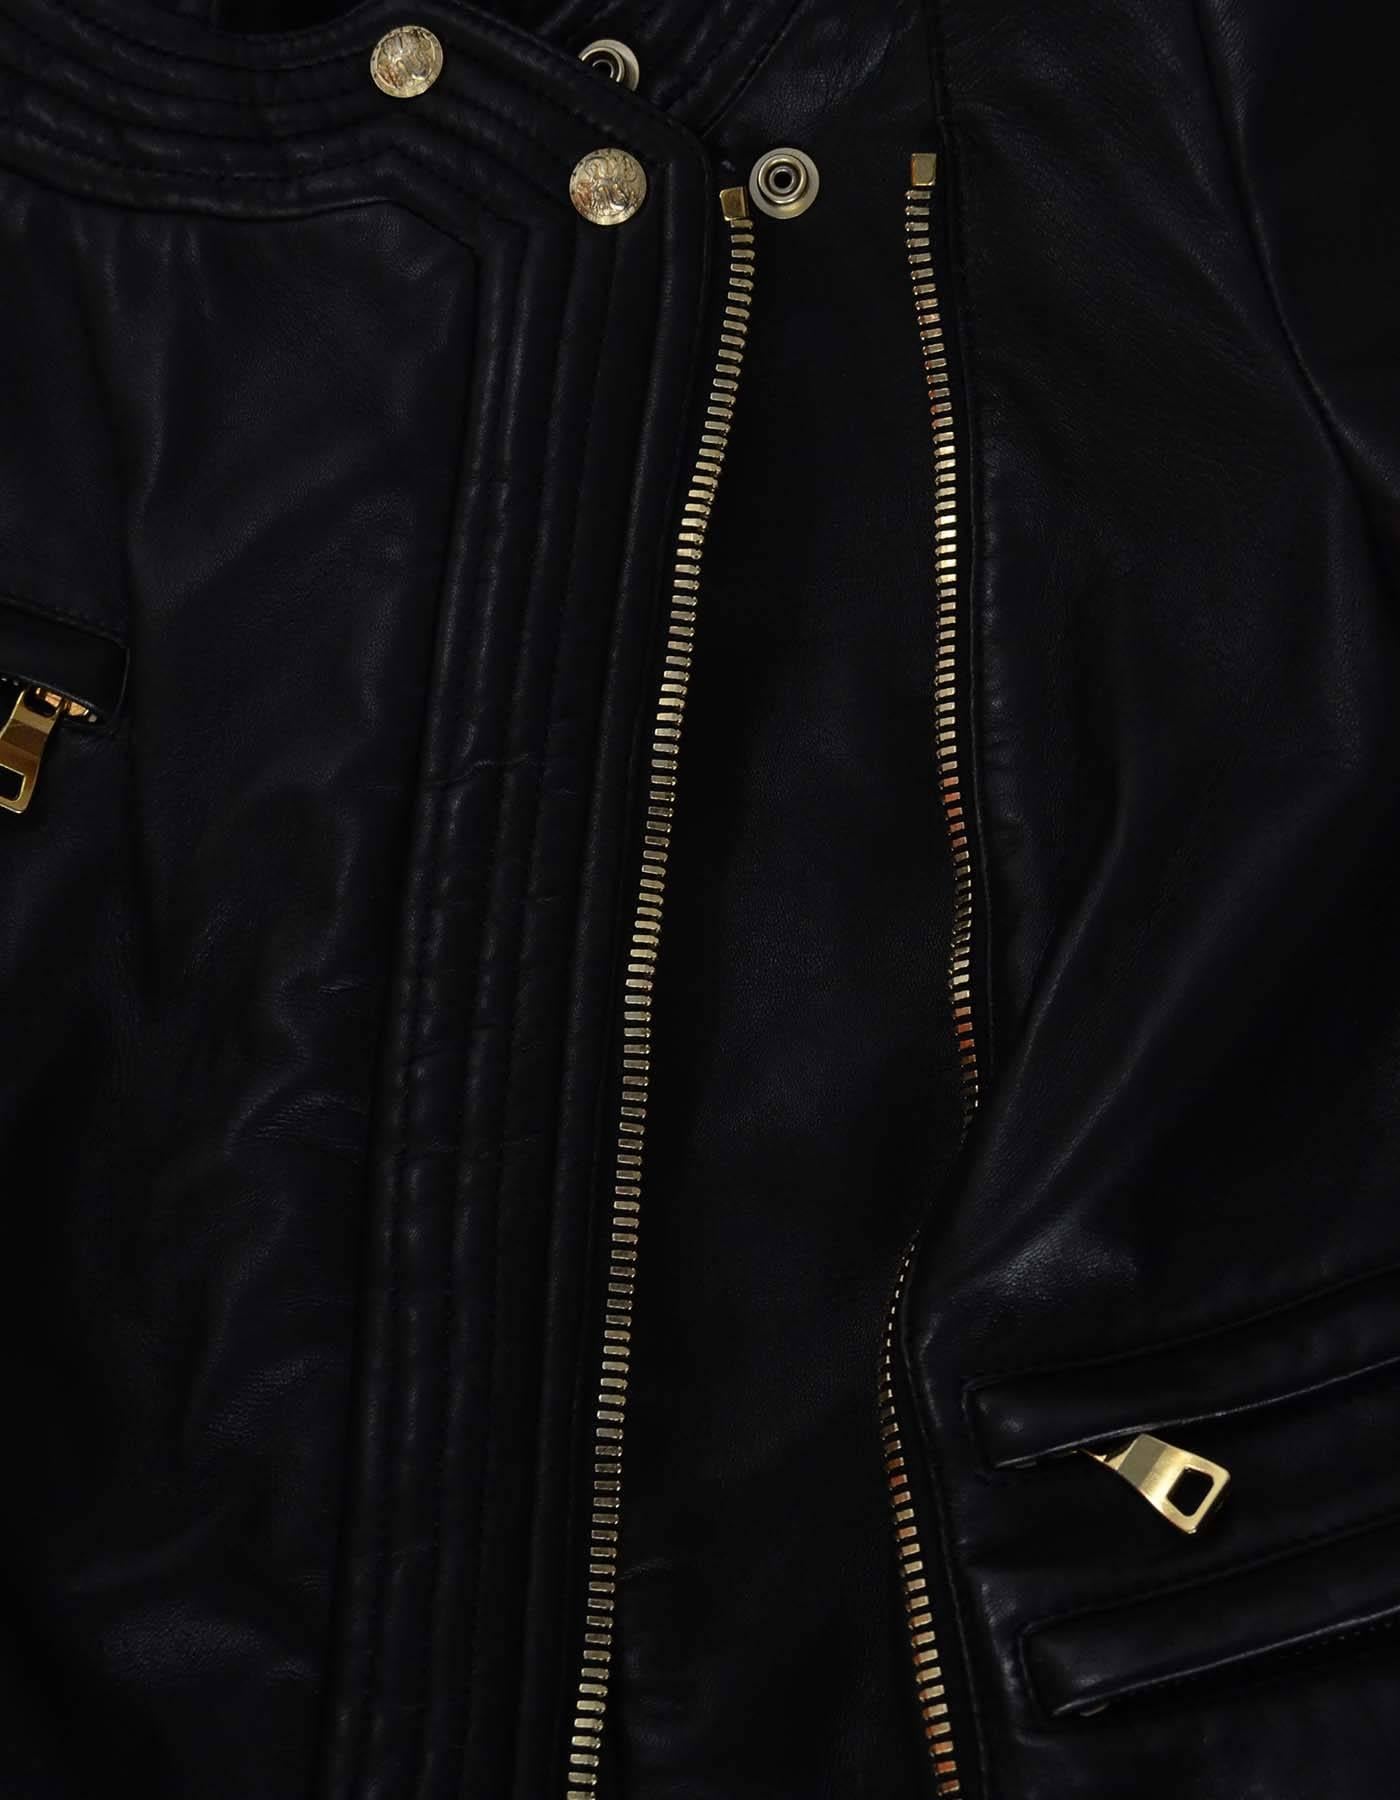 Women's Balmain Black Quilted Leather Biker Jacket sz 36 rt. $4, 035